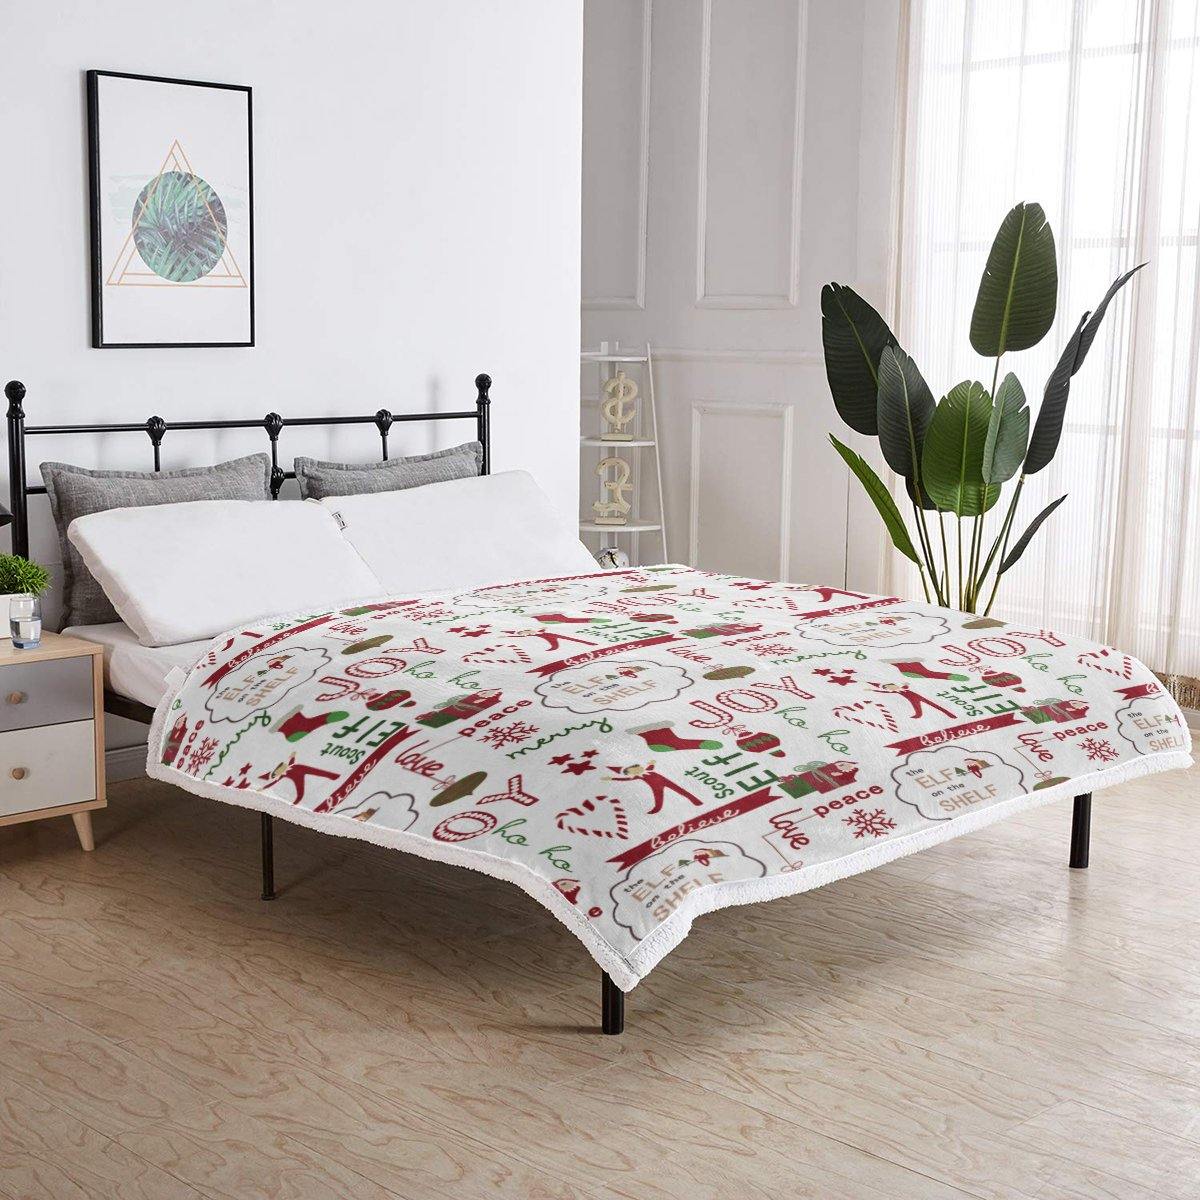 WONGS BEDDING Christmas Icon Elements Blanket - Wongs bedding